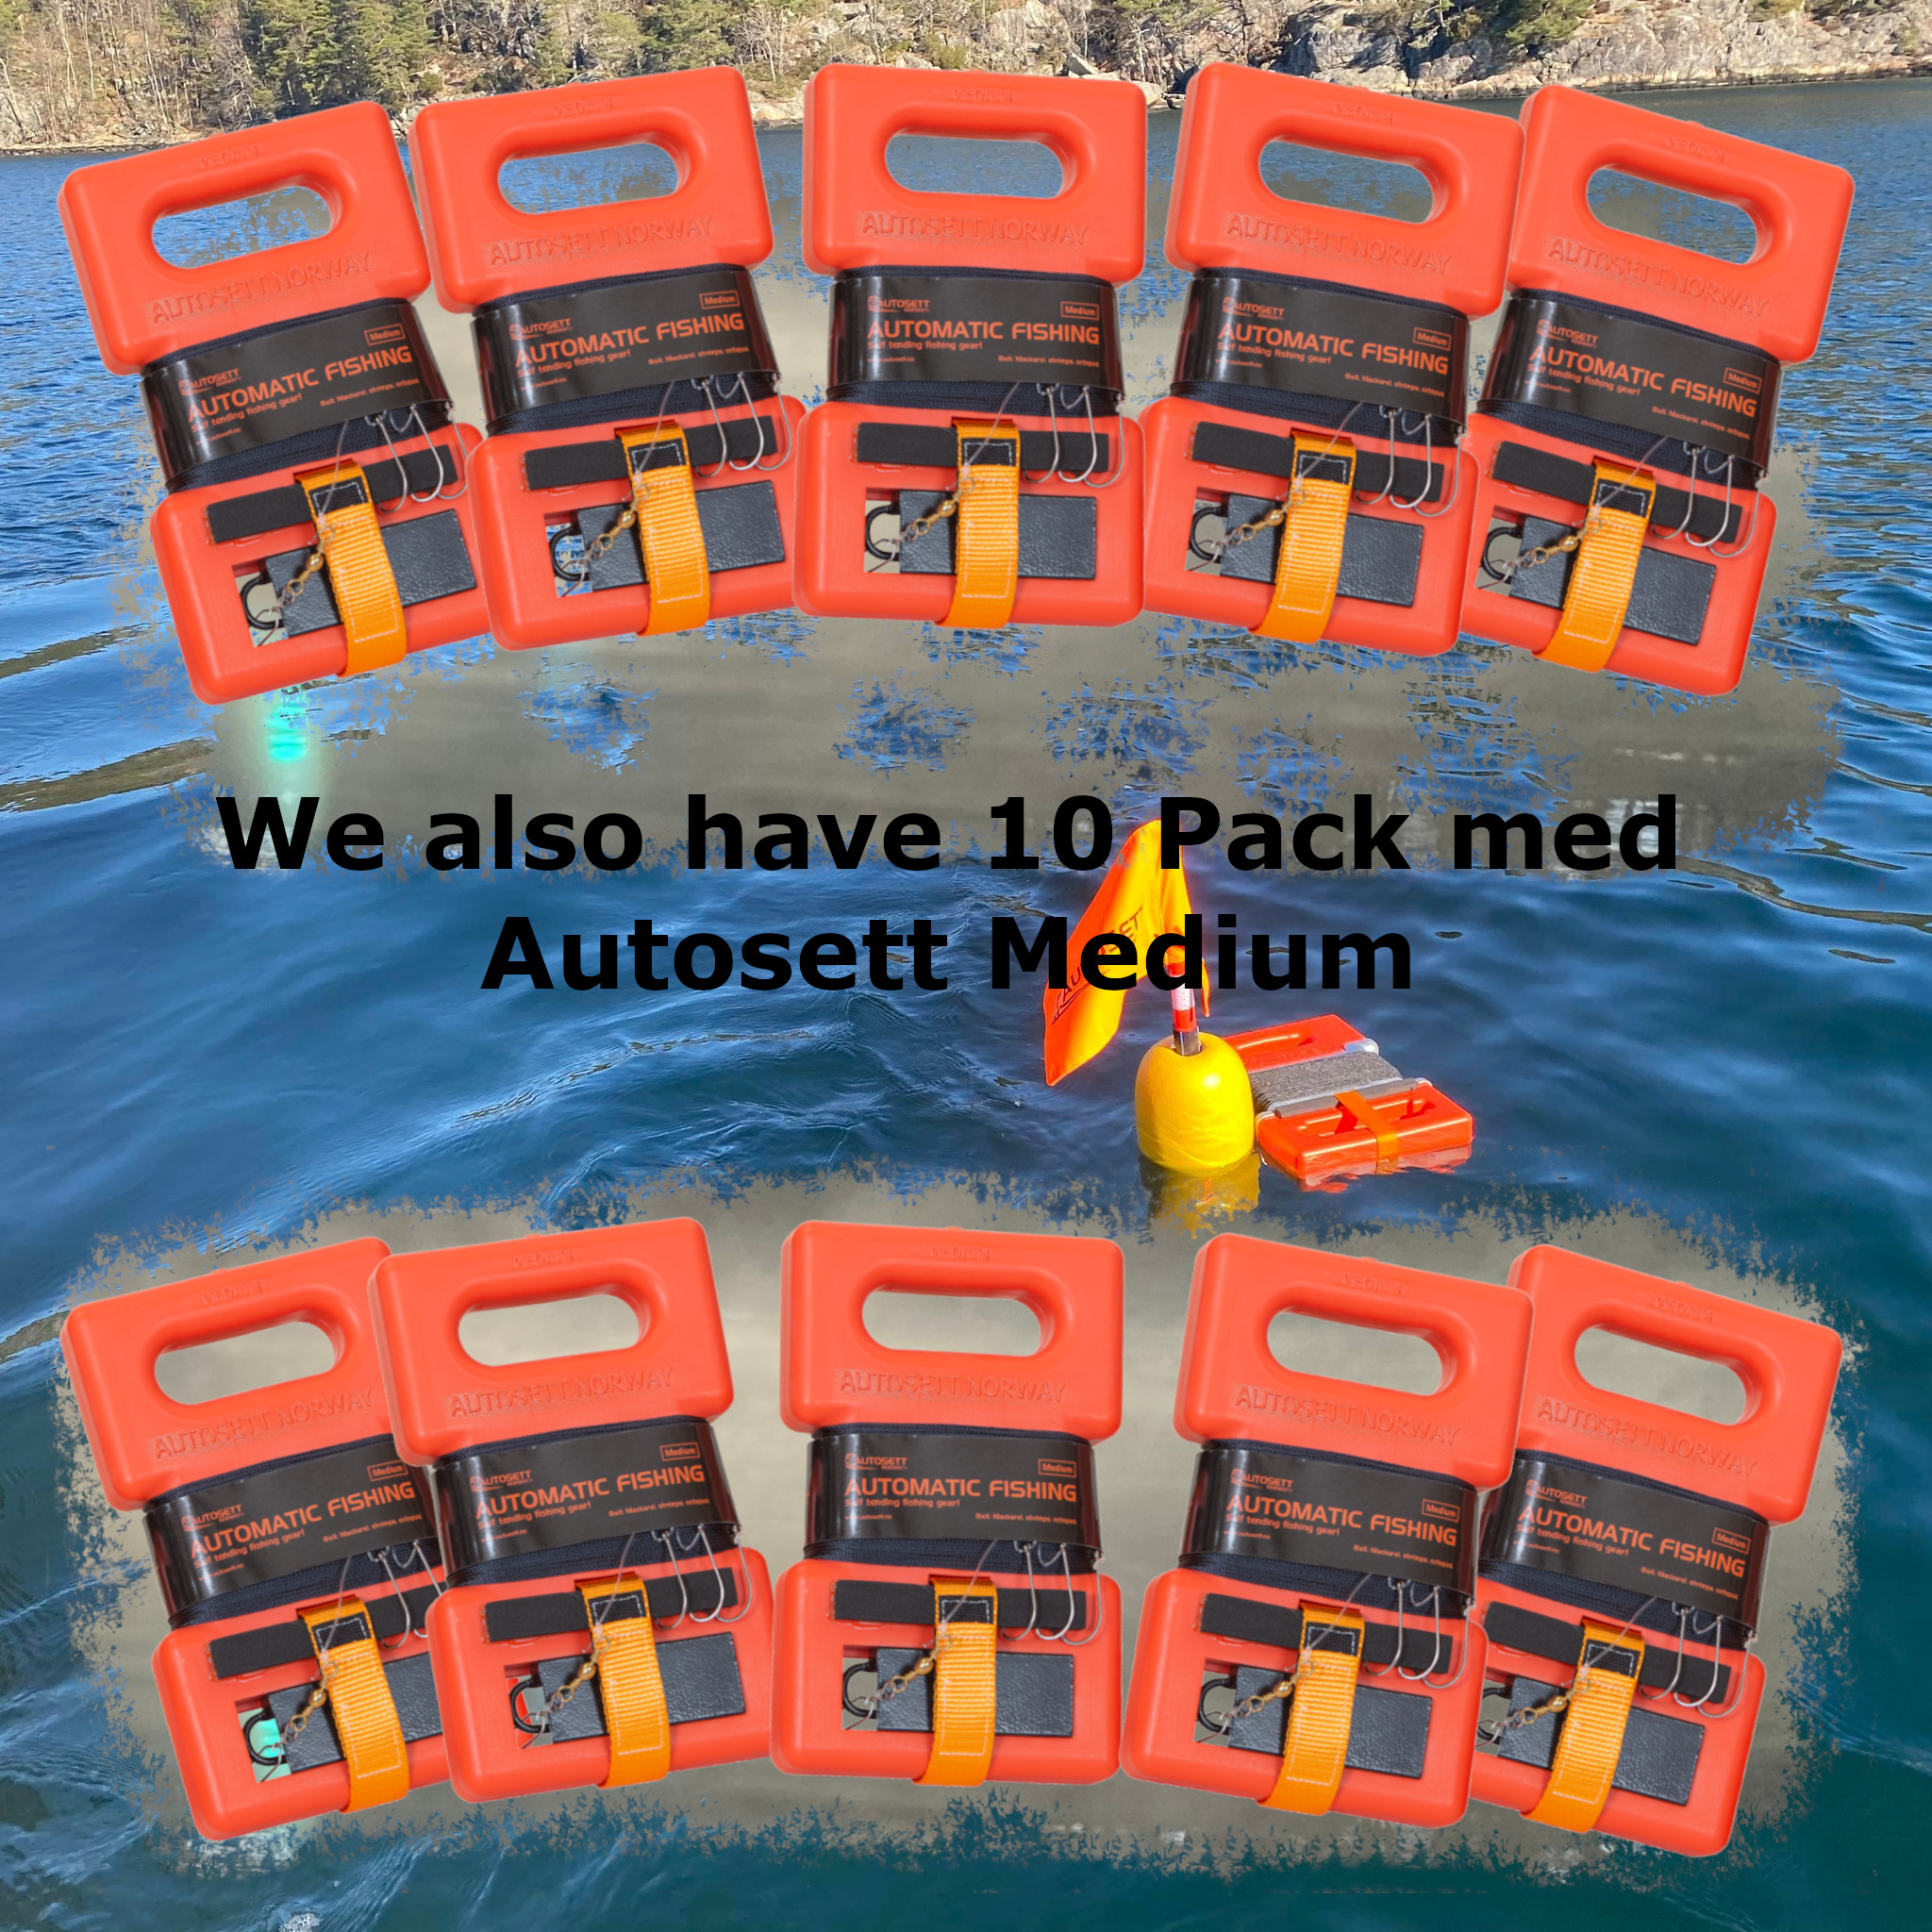 https://www.autosett.net/users/autosettint_mystore_no/images/10_pack_with_Autosett_Medium_fishing_Gear.jpg